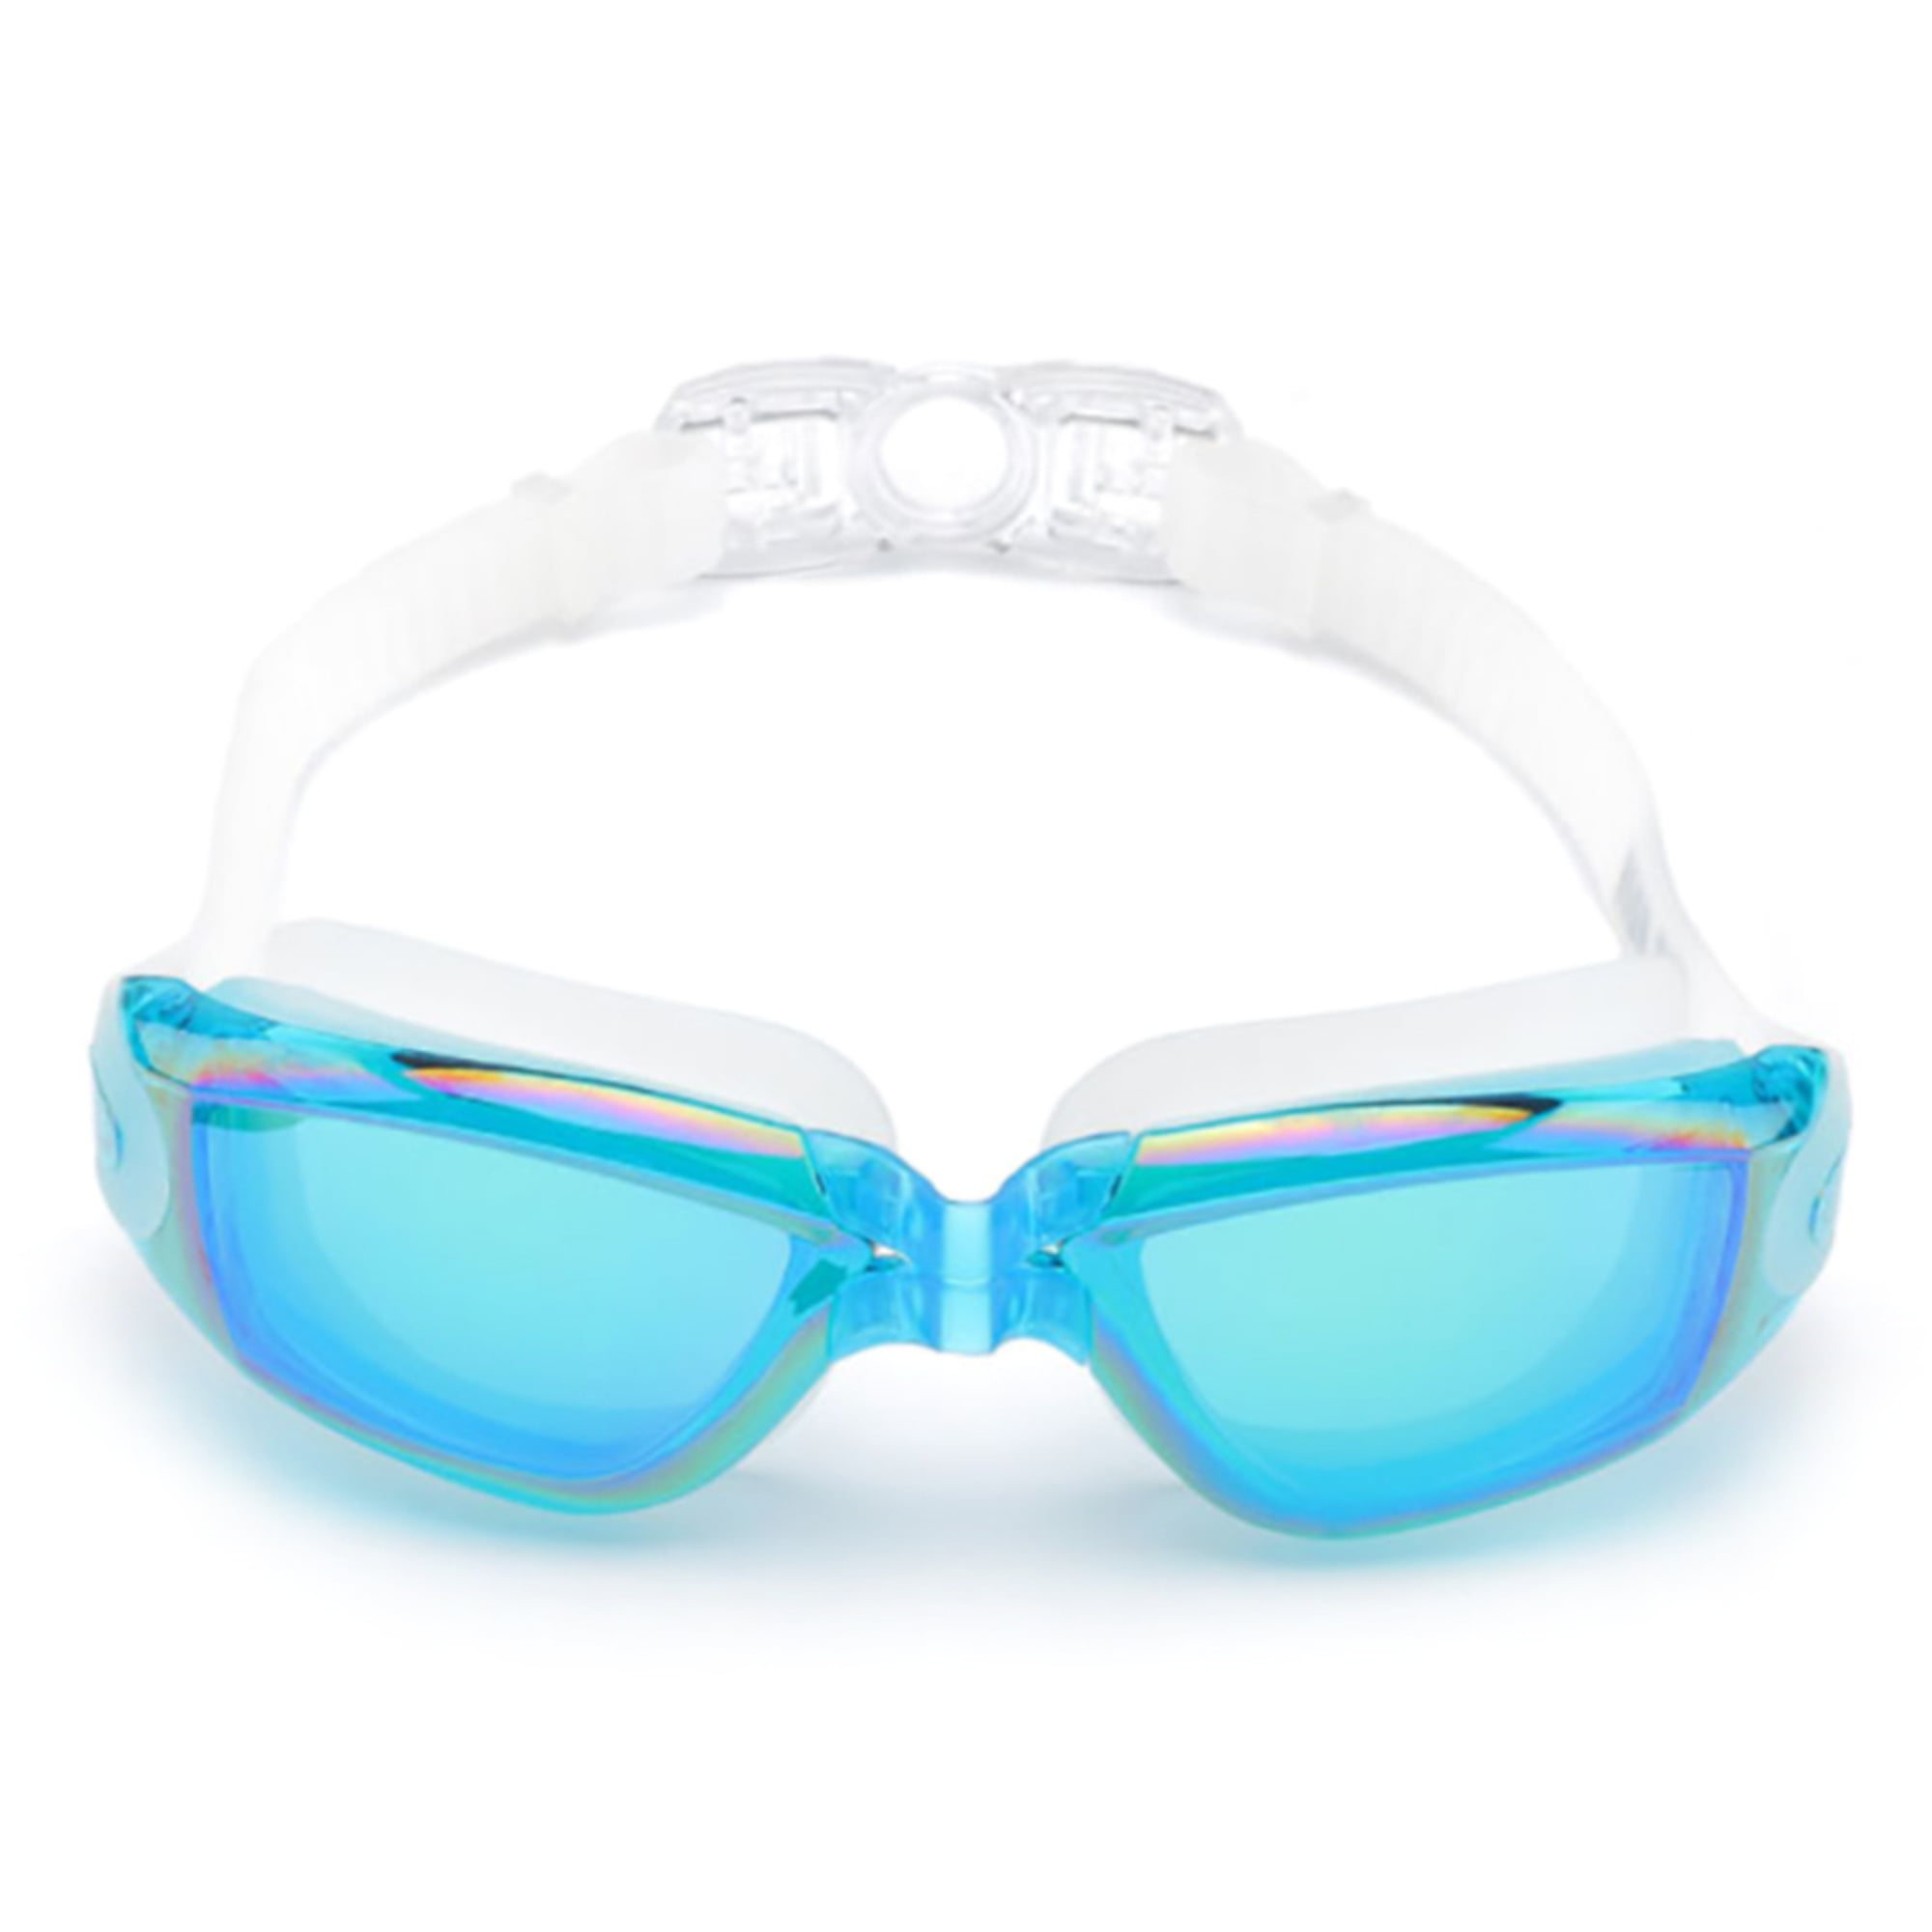 Unisex Anti-Fog Swimming Goggles Fit Men Women Adjustable Diving Glasses Pool 